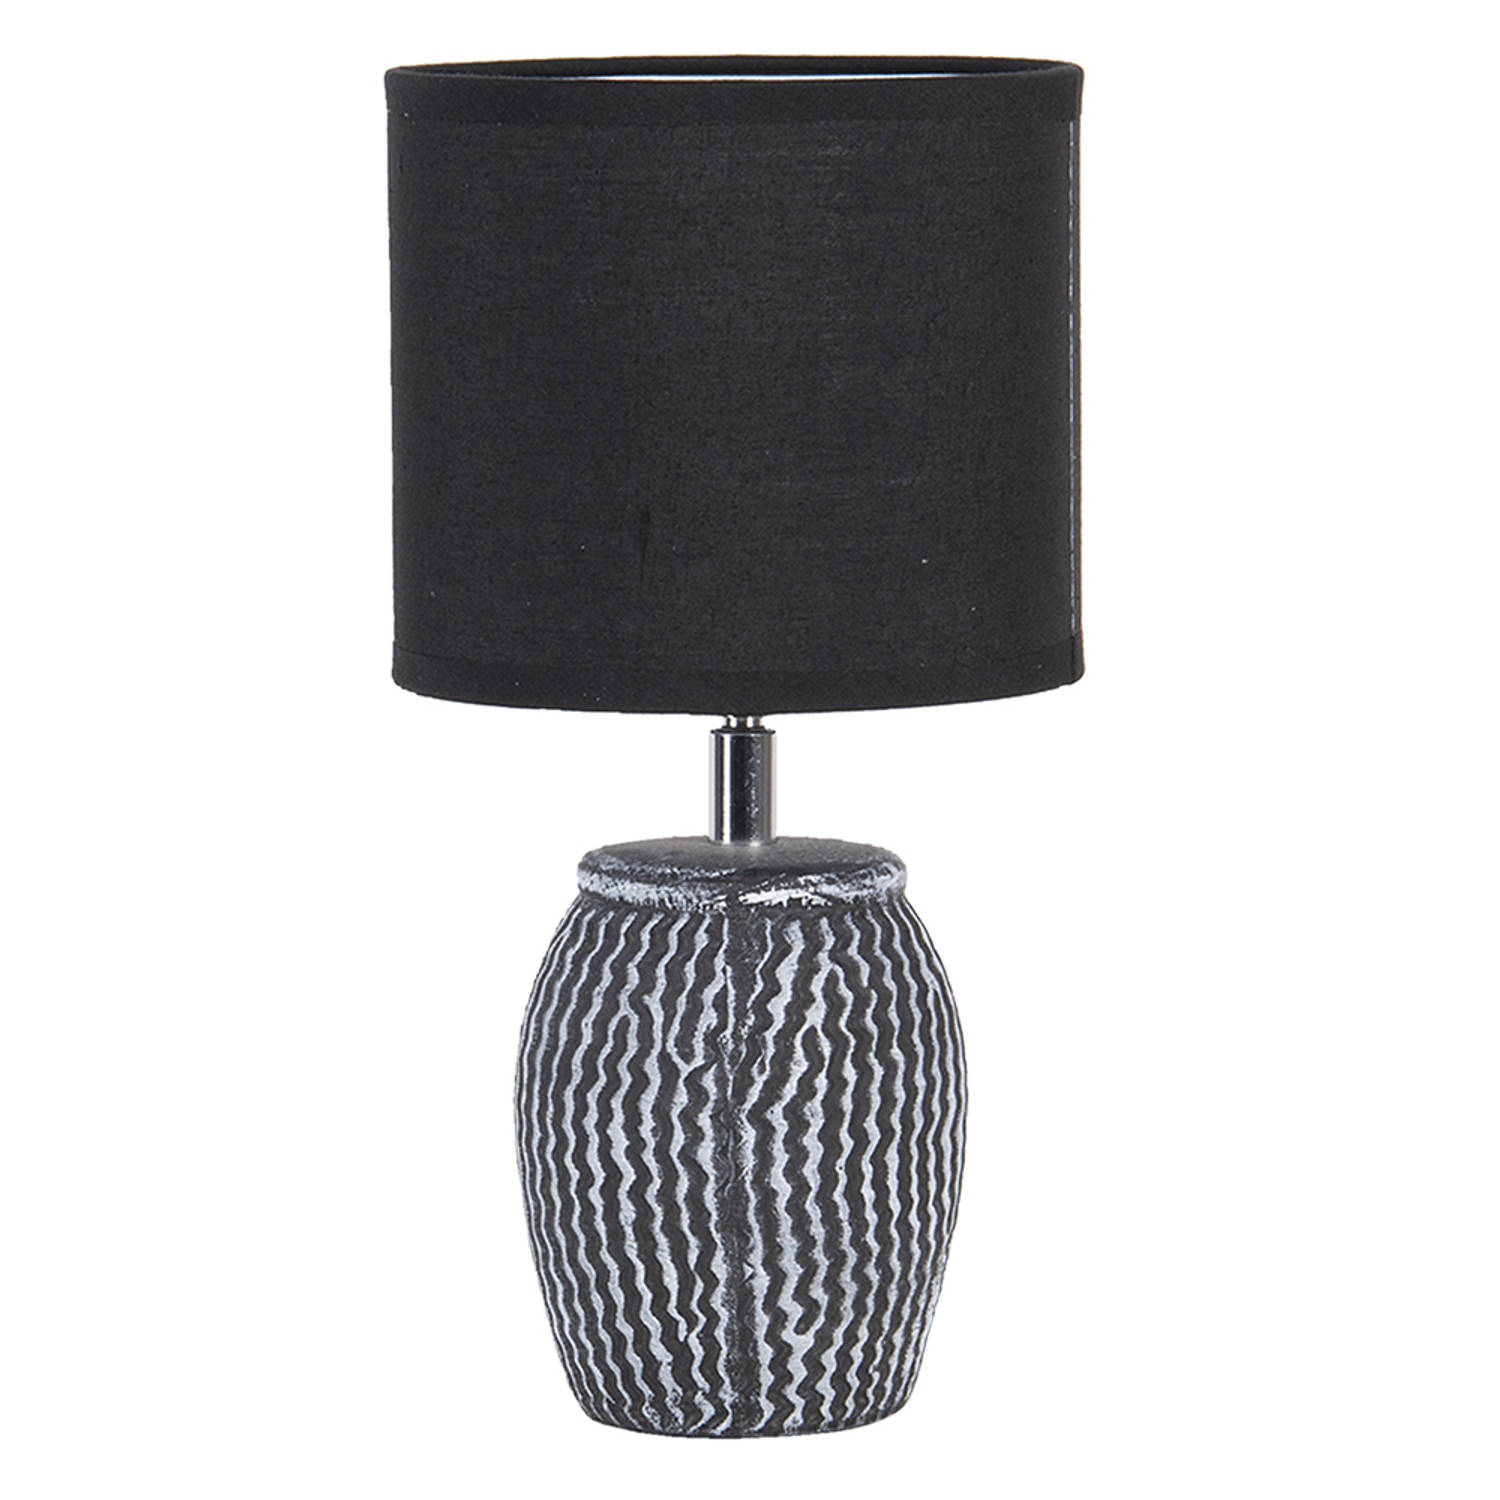 HAES DECO Tafellamp Modern Chic Stijlvolle Lamp, Ø 15x26 cm Grijs-Wit Bureaulamp, Sfeerlamp, Nachtla